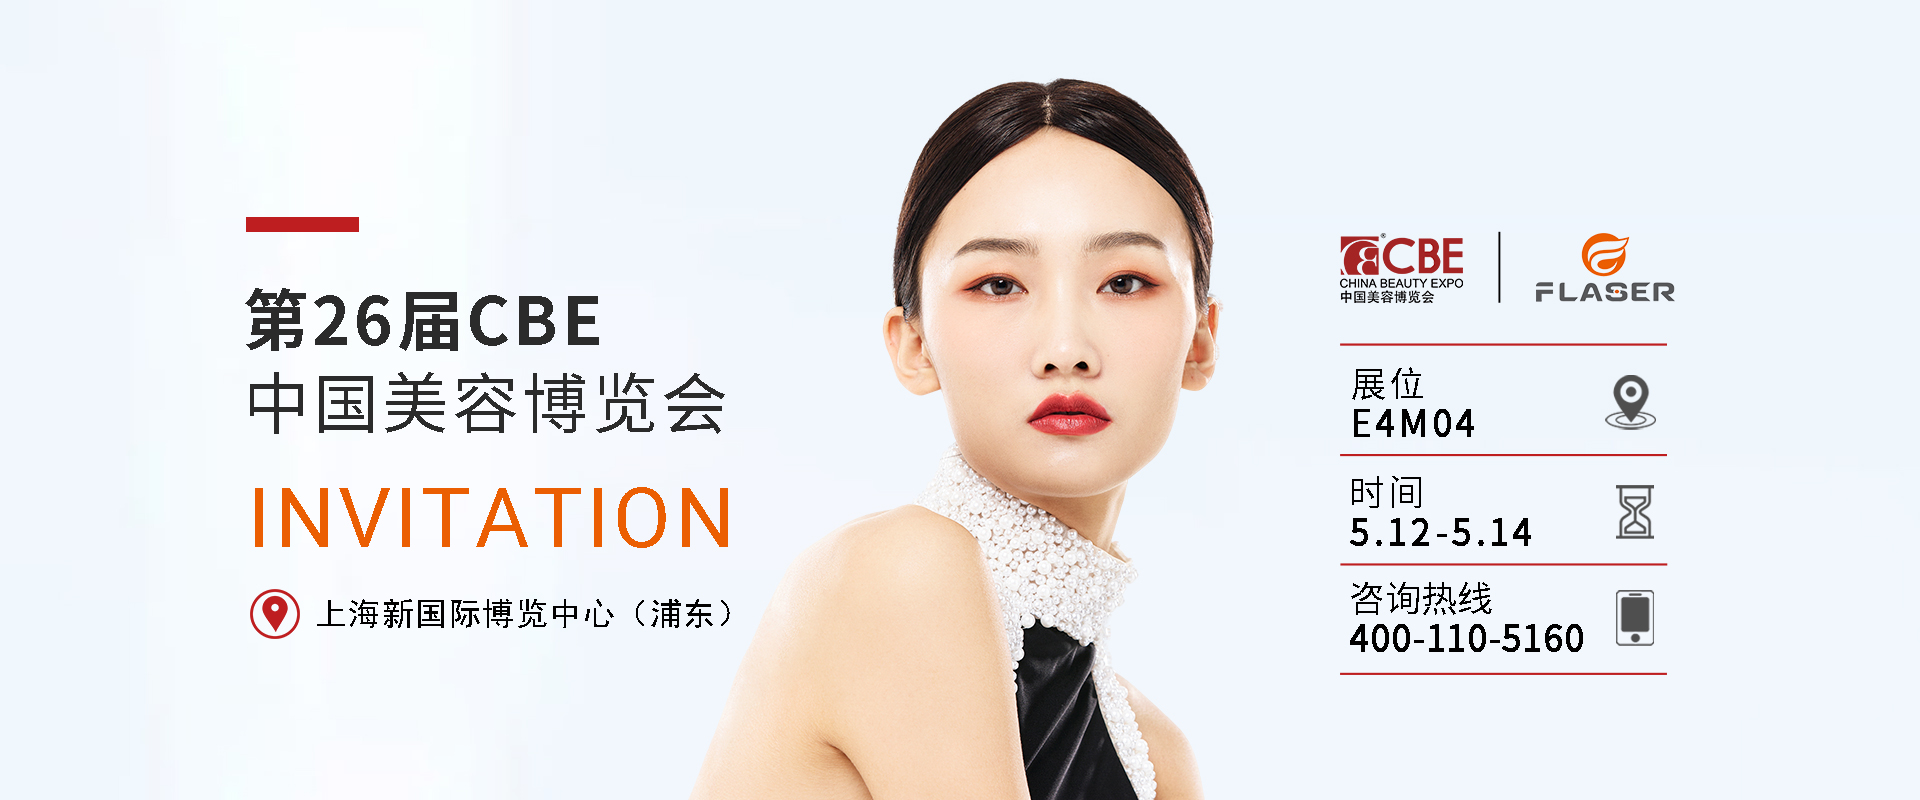 CBE中国美容博览会—飞嘉欢迎您